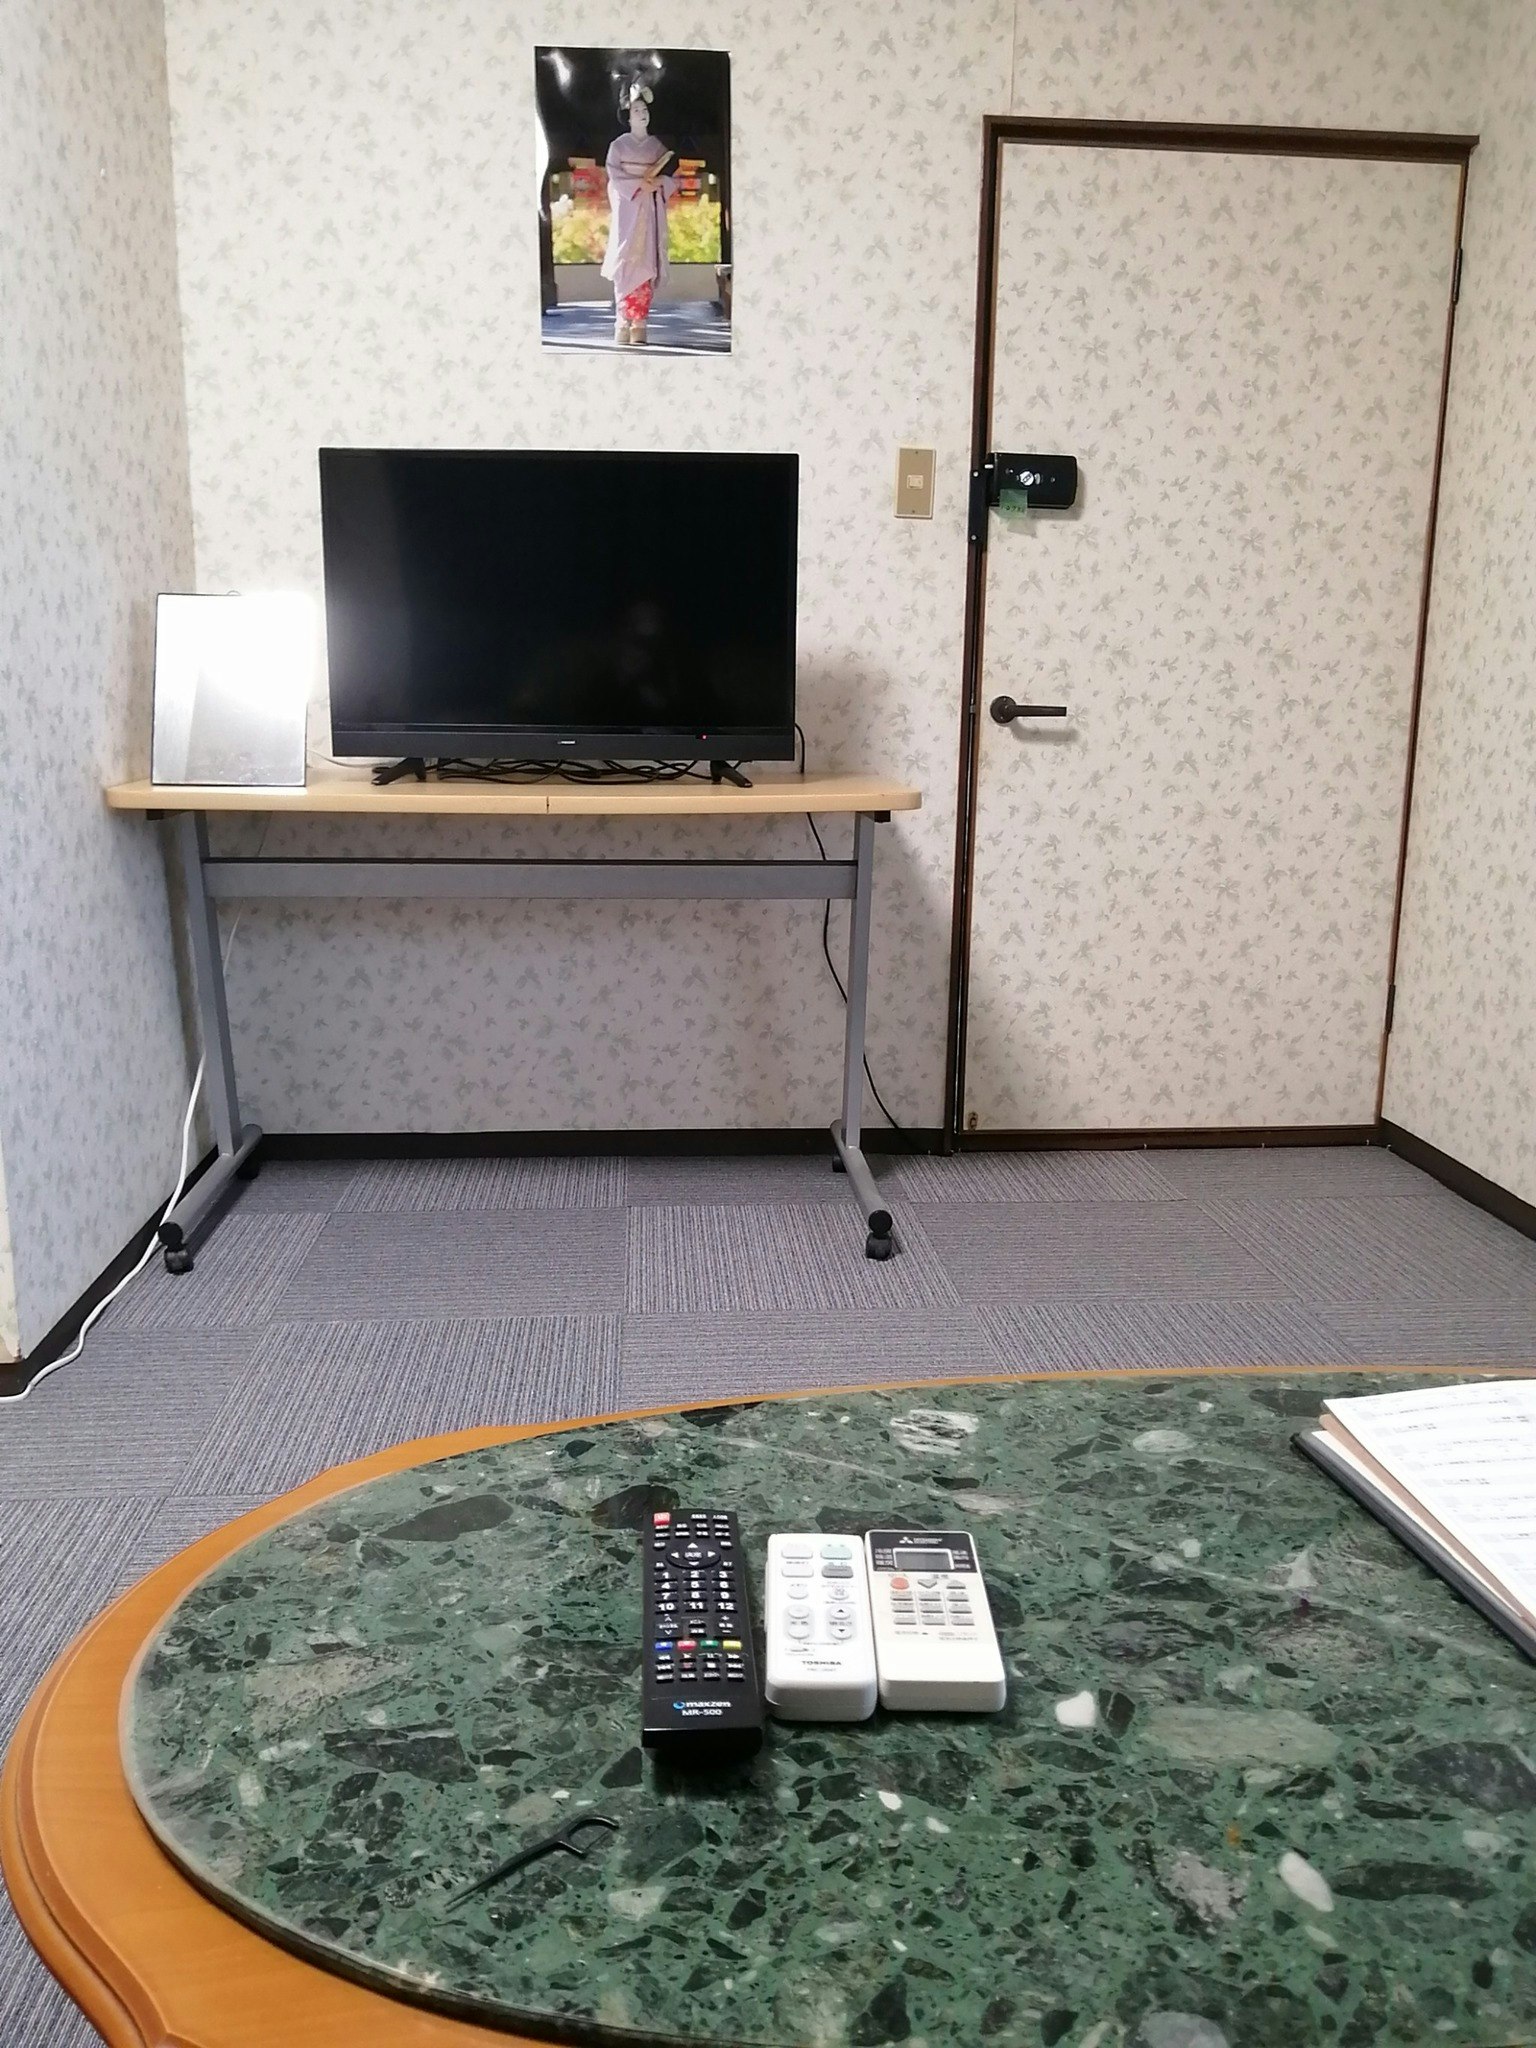 private room/洋室2名様/JR和泉府中駅7分市内25分空港30分/駐車無料/wi-fi